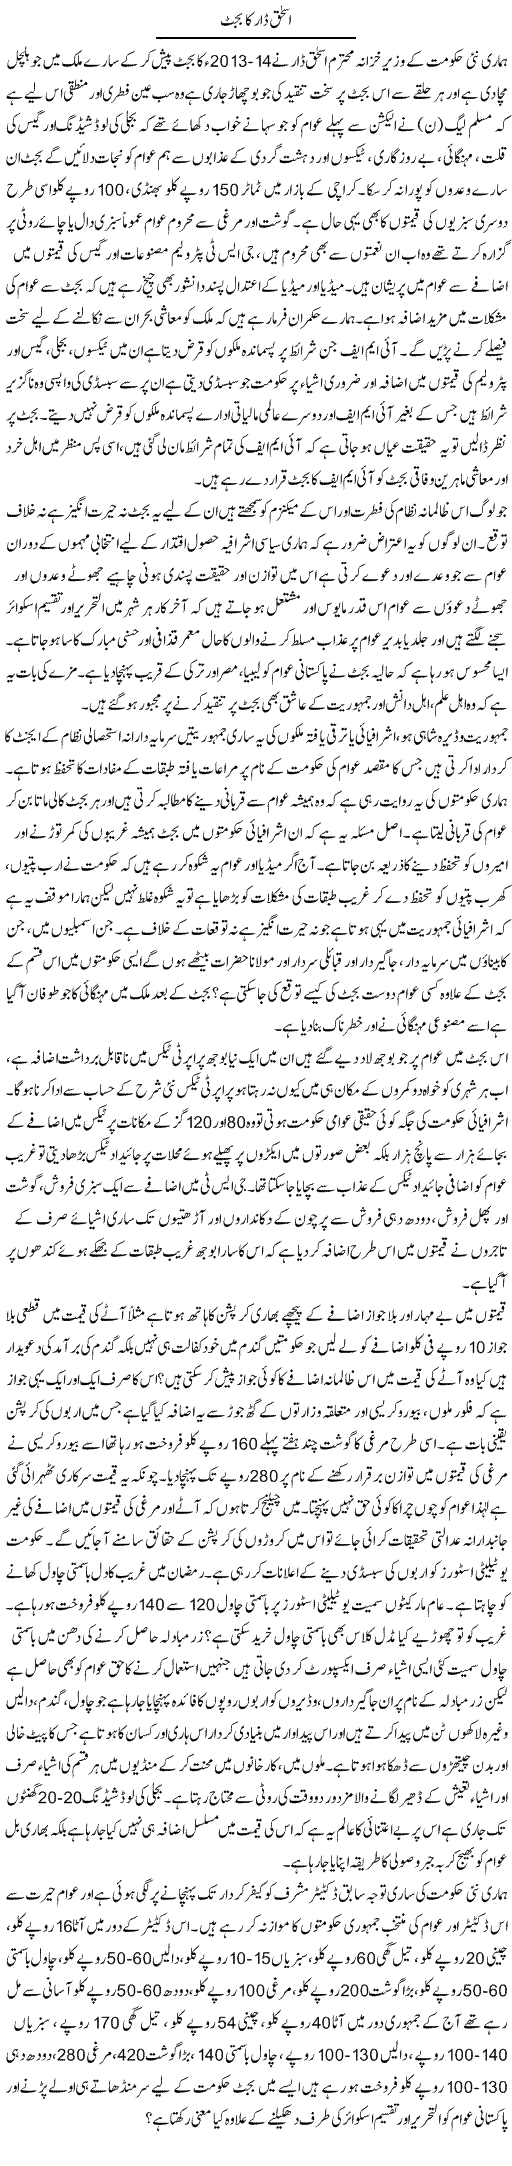 Ishaq Dar Ka Budget | Zahir Akhter Bedi | Daily Urdu Columns